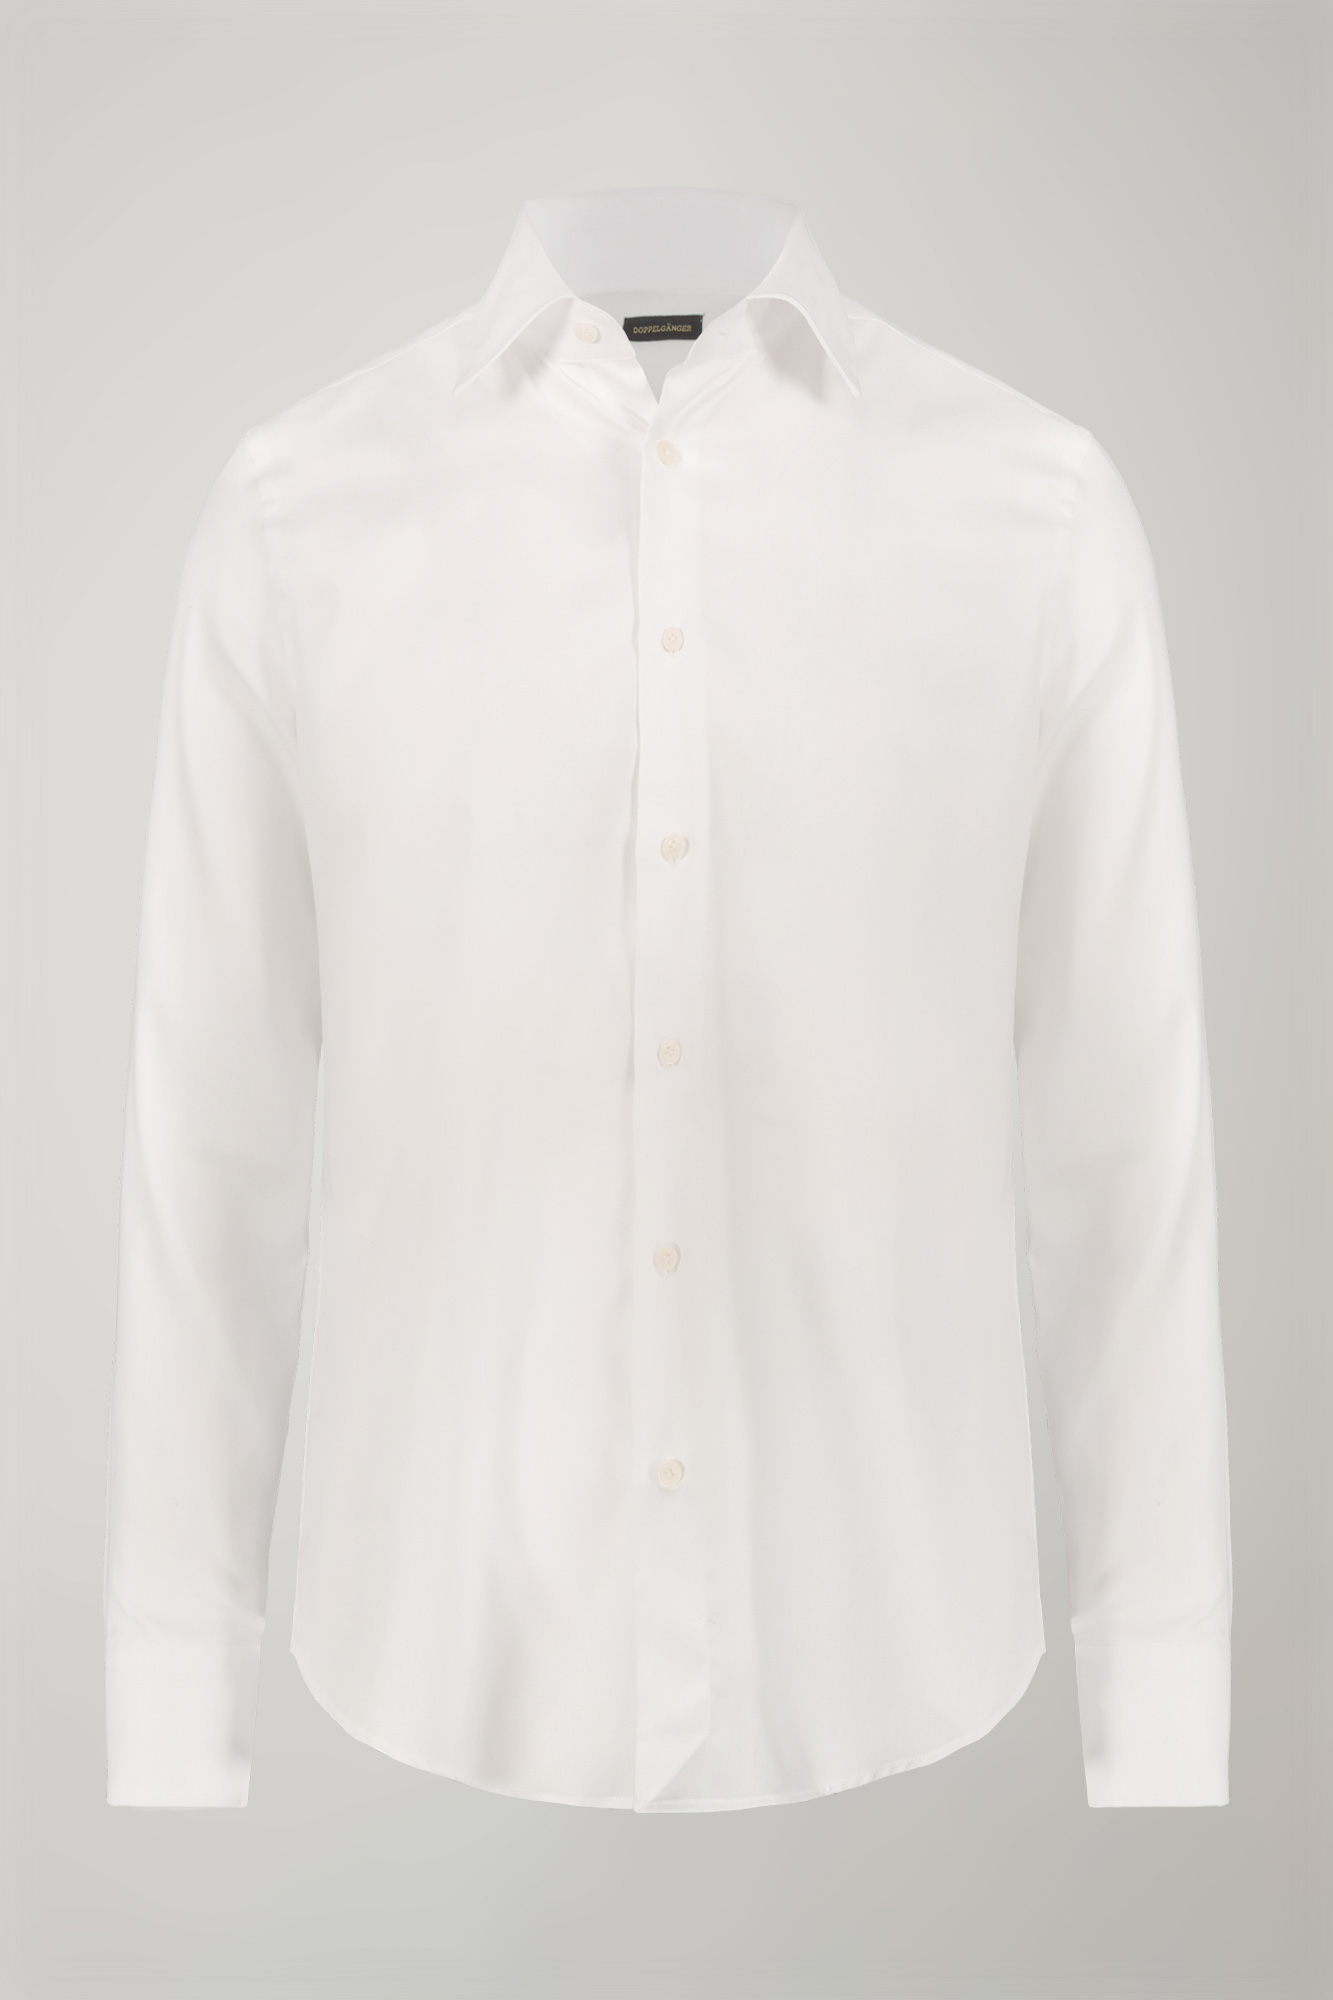 Men's shirt classic collar 100% cotton lightweight oxford fabric regular fit image number null